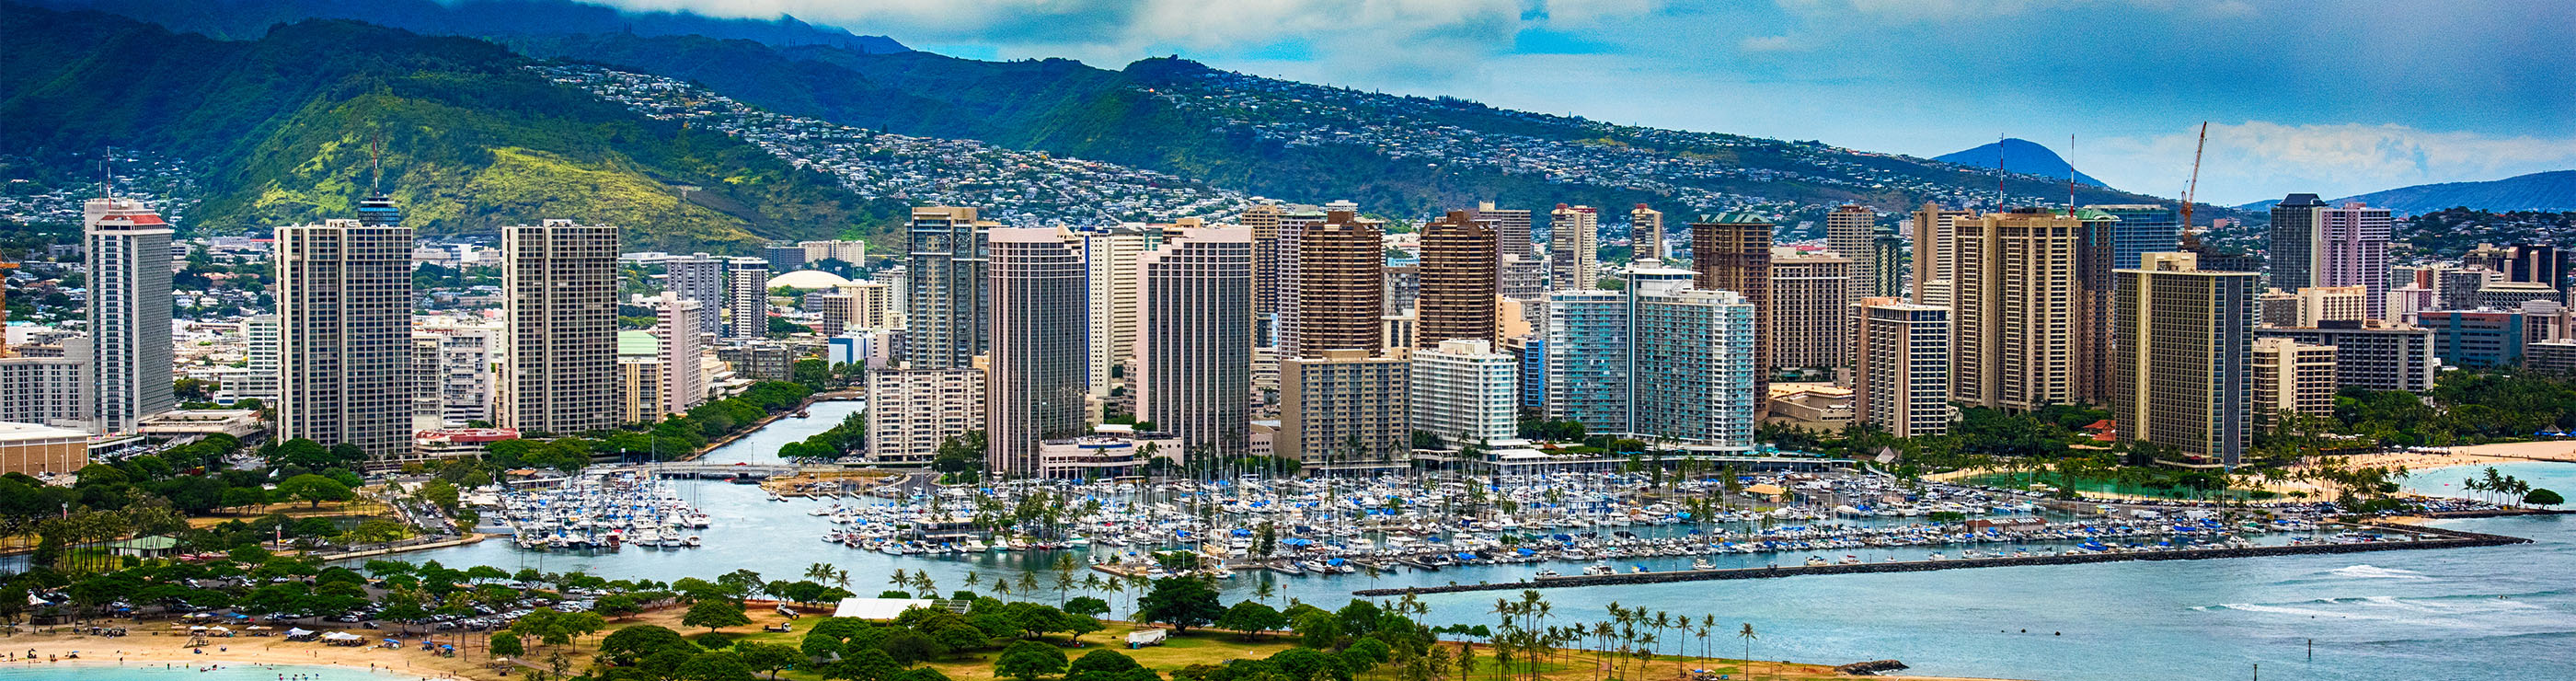 Honolulu (1001 Bishop Street), Hawaiʻi